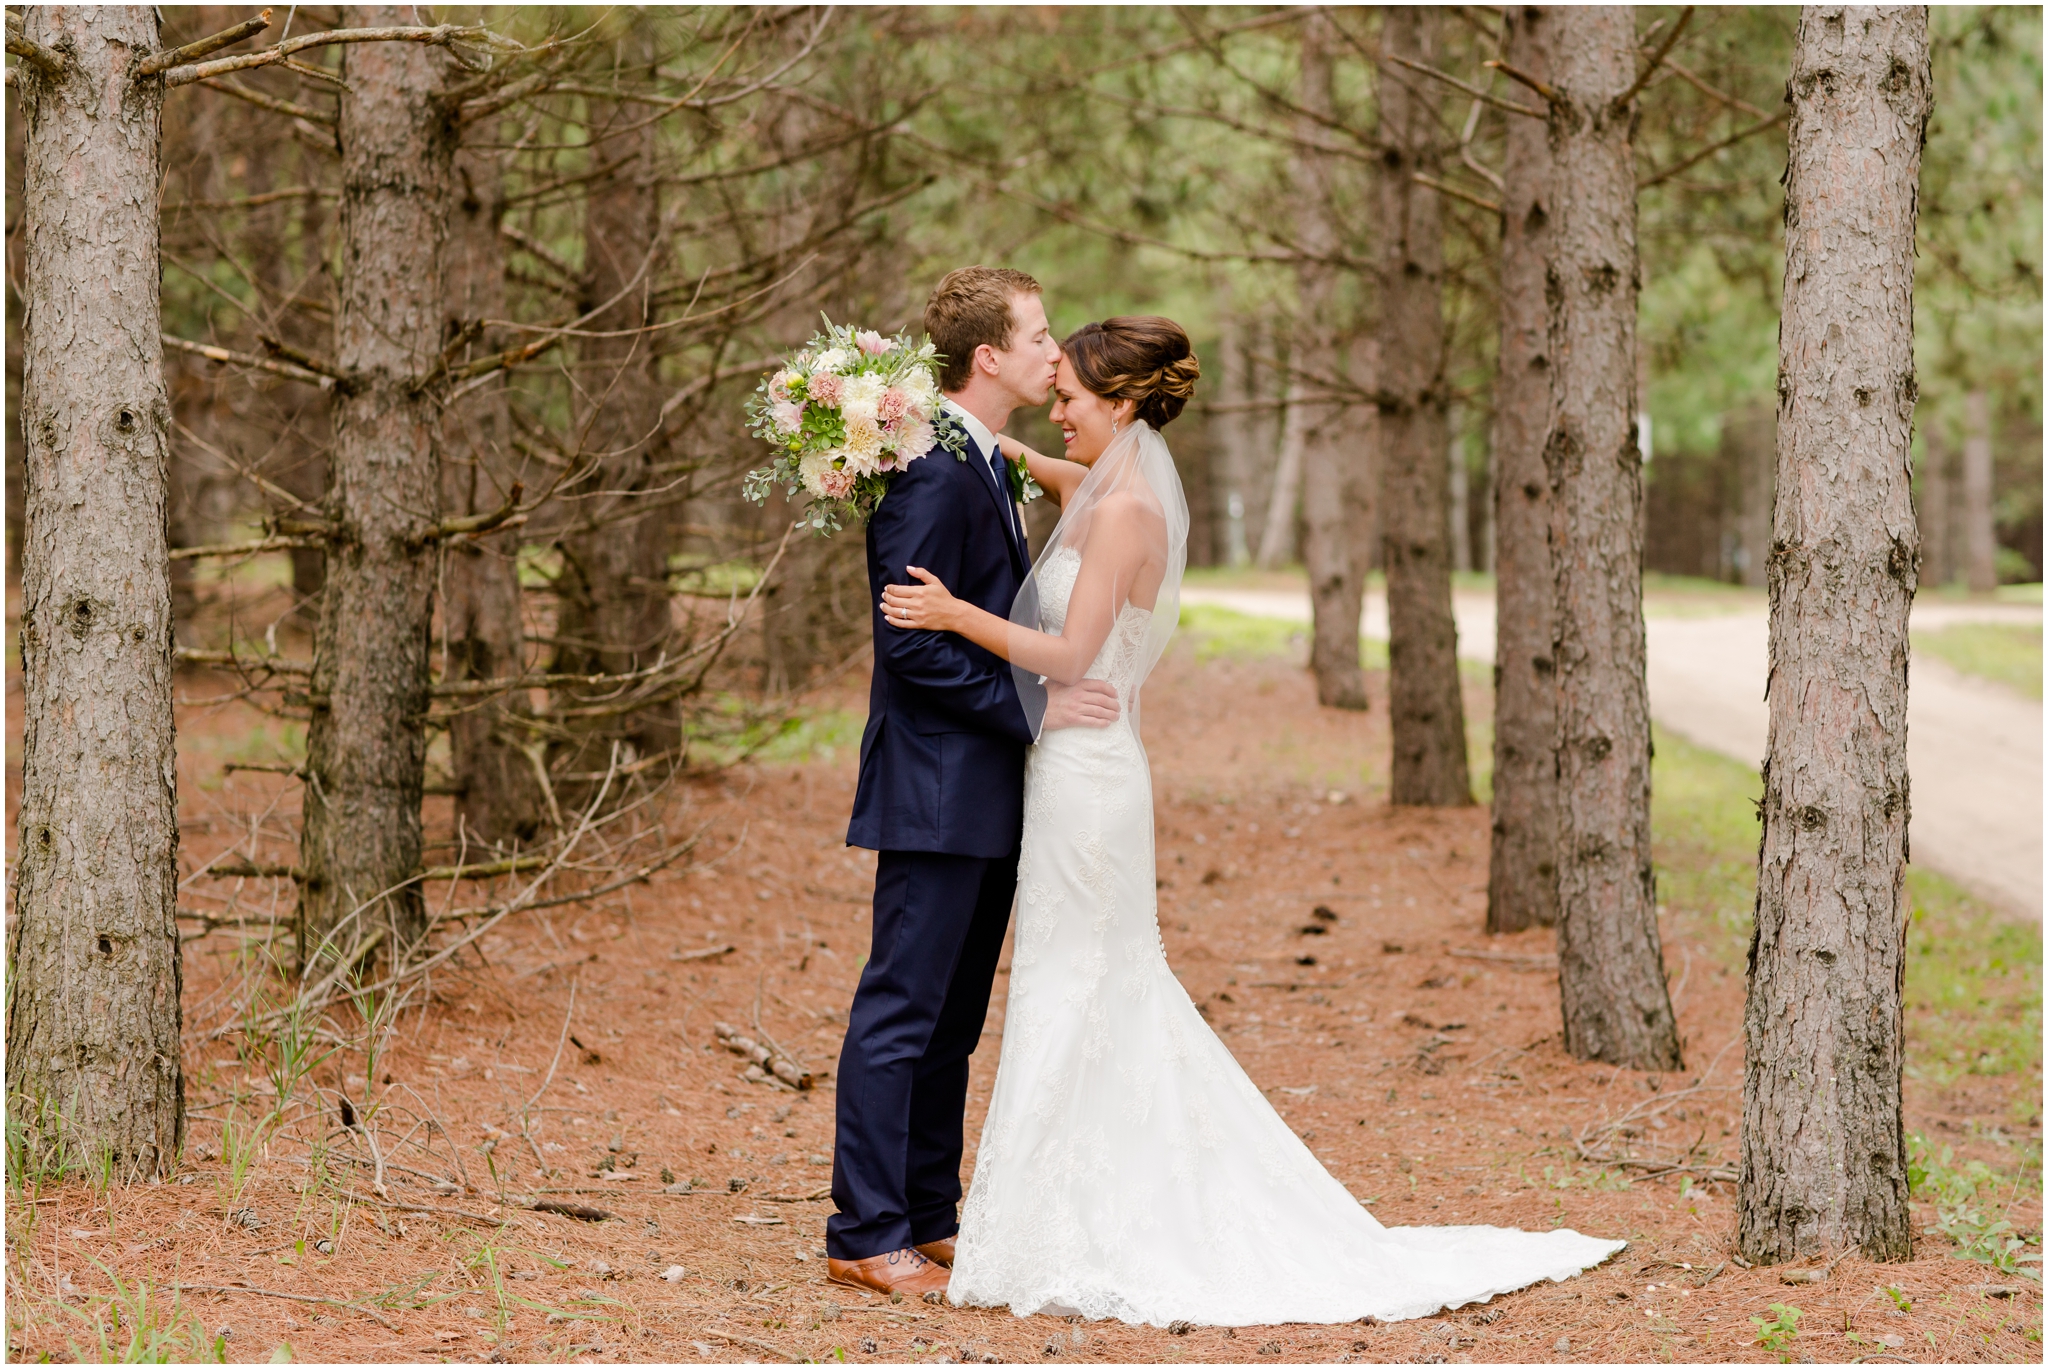 Thumper Pond Wedding Photos, Brittney and Caleb